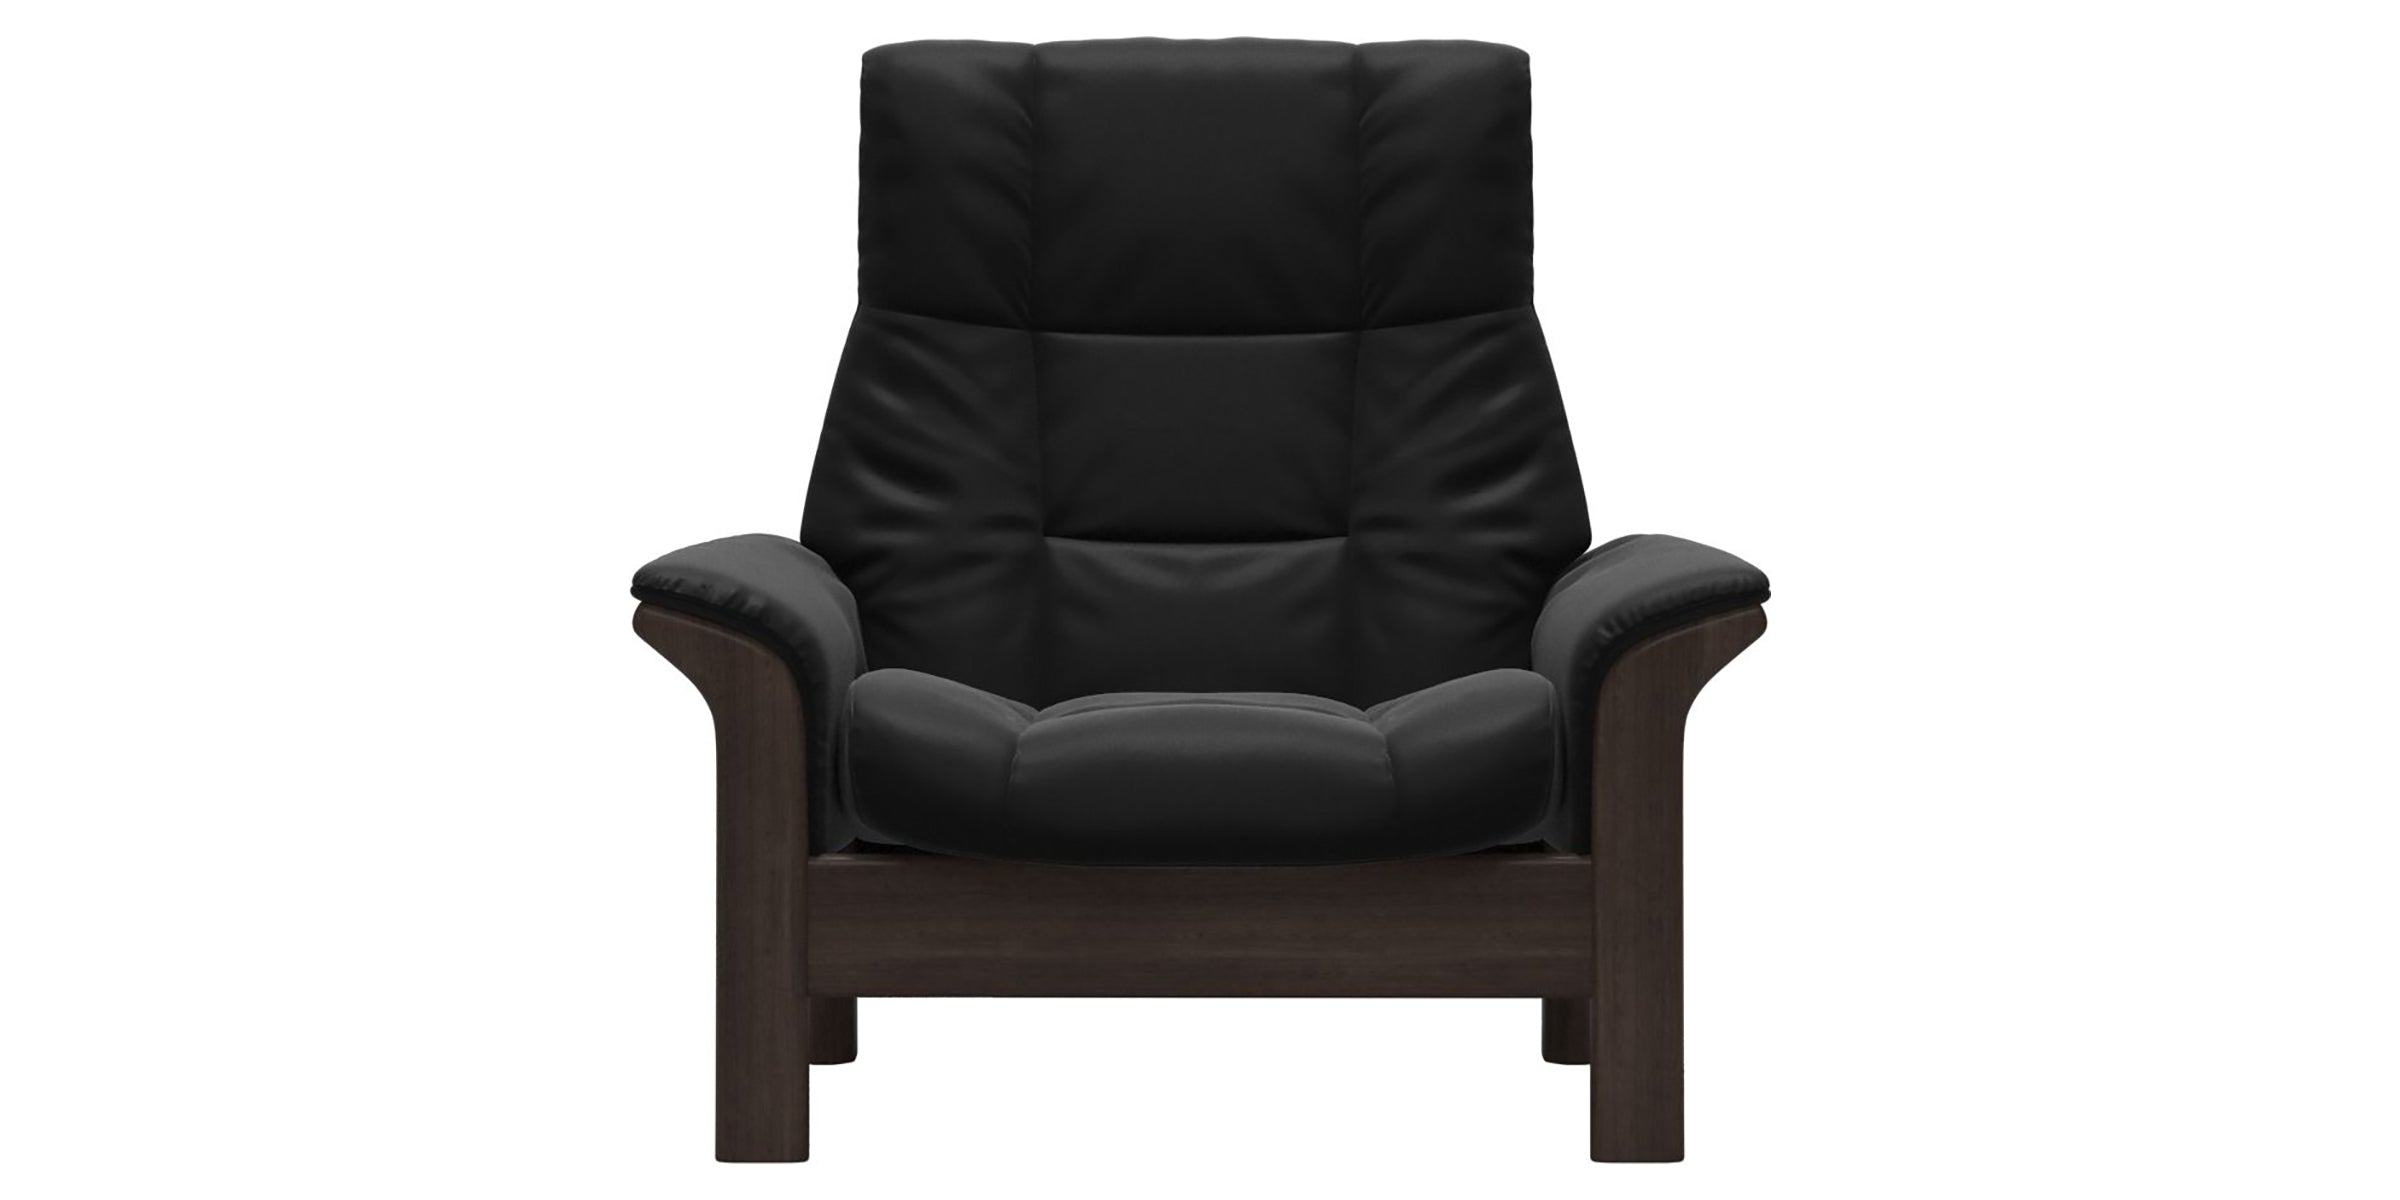 Paloma Leather Black and Wenge Base | Stressless Buckingham High Back Chair | Valley Ridge Furniture